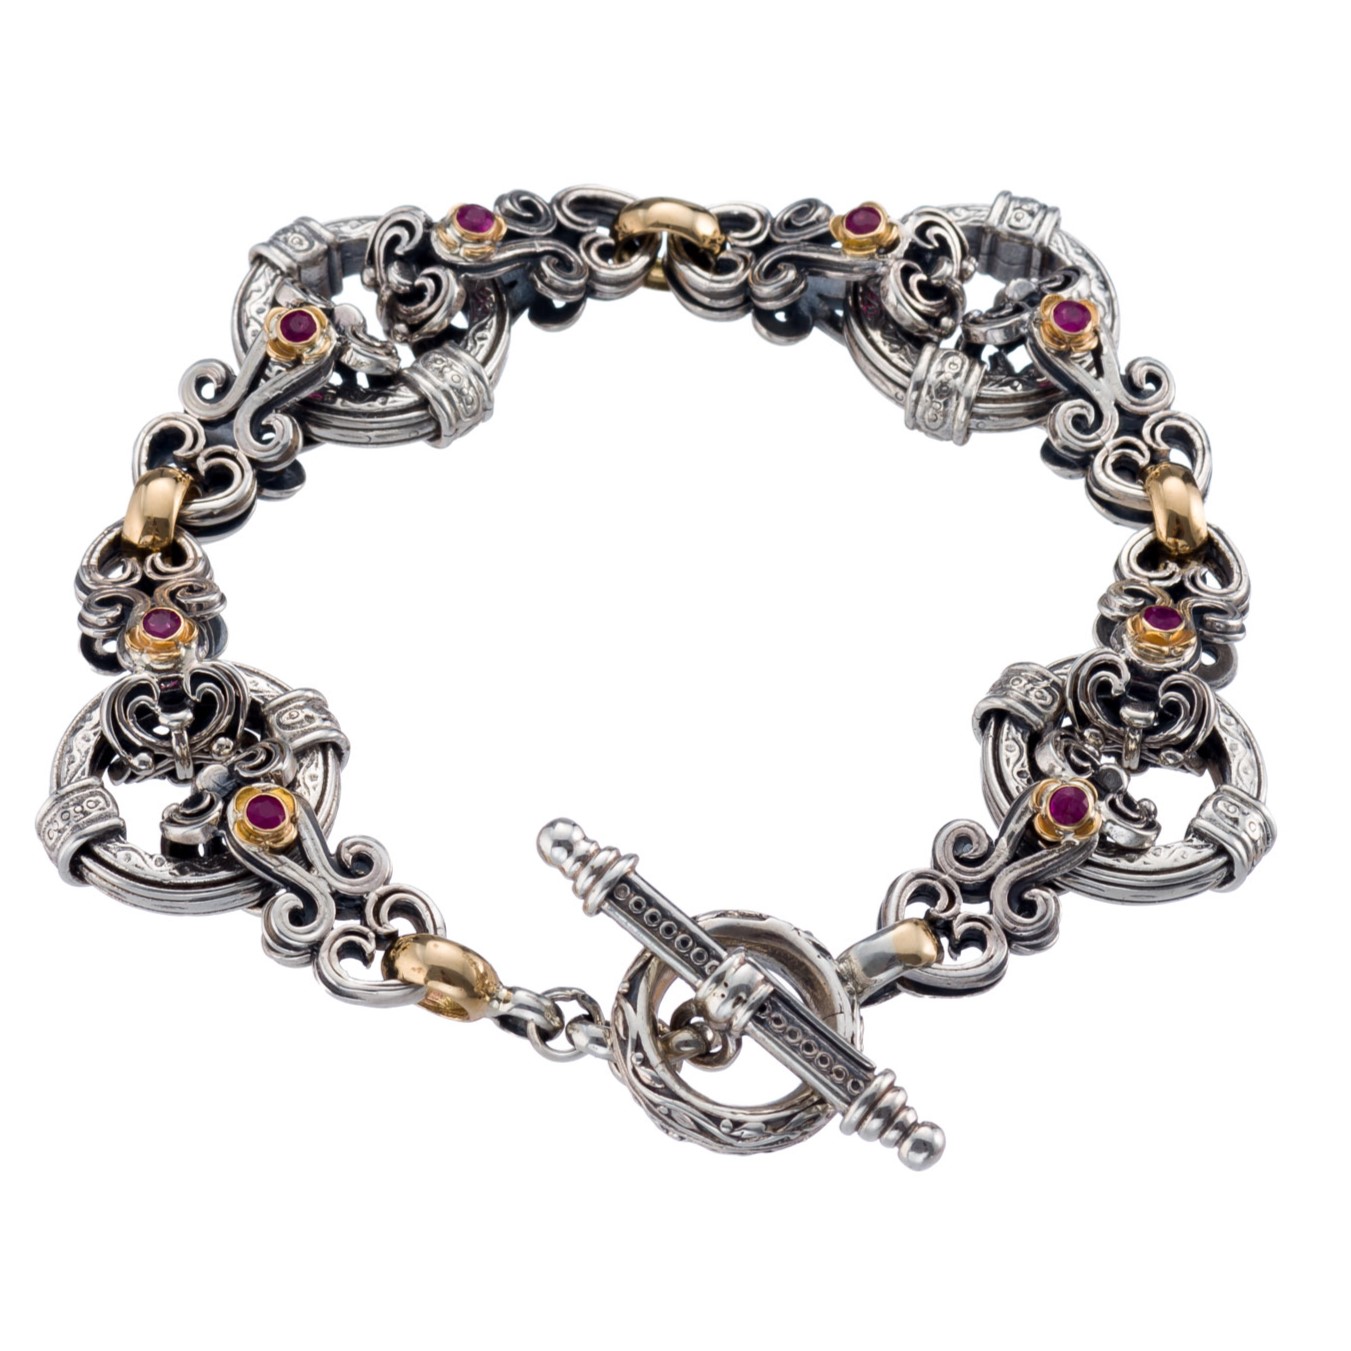 Byzantine flower bracelet in 18K Gold and Sterling Silver